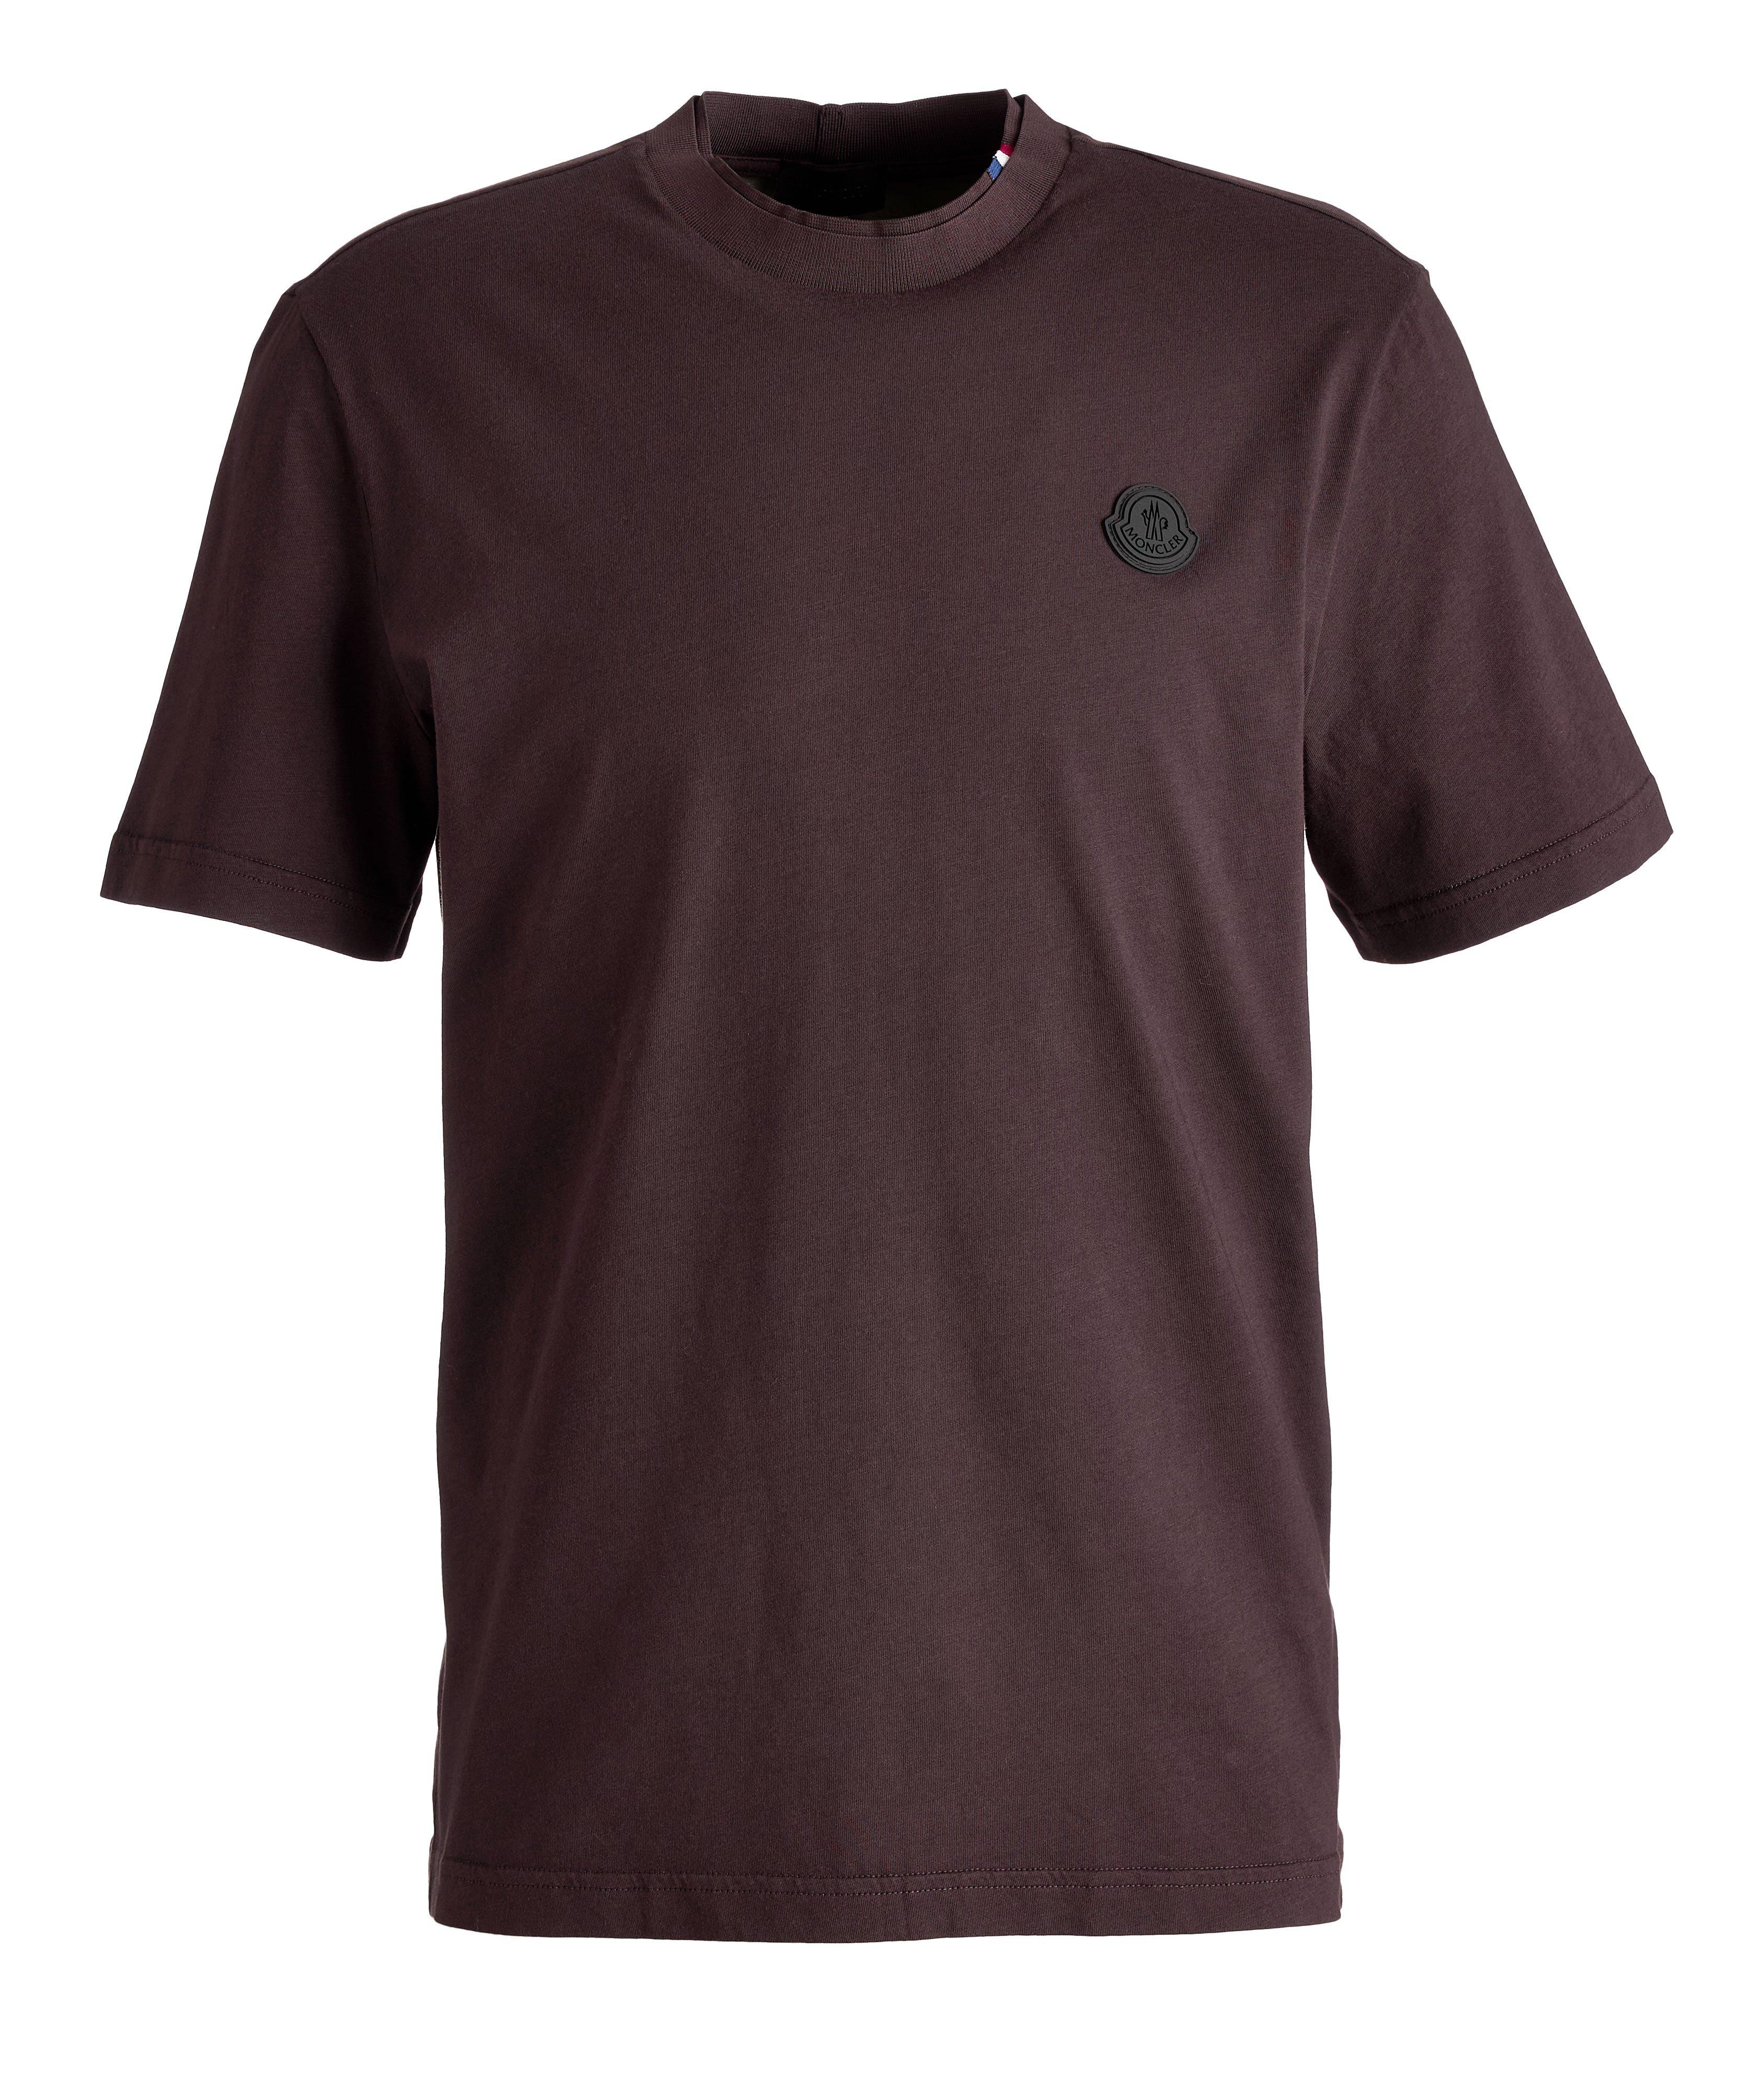 T-shirt Maglia en coton image 0